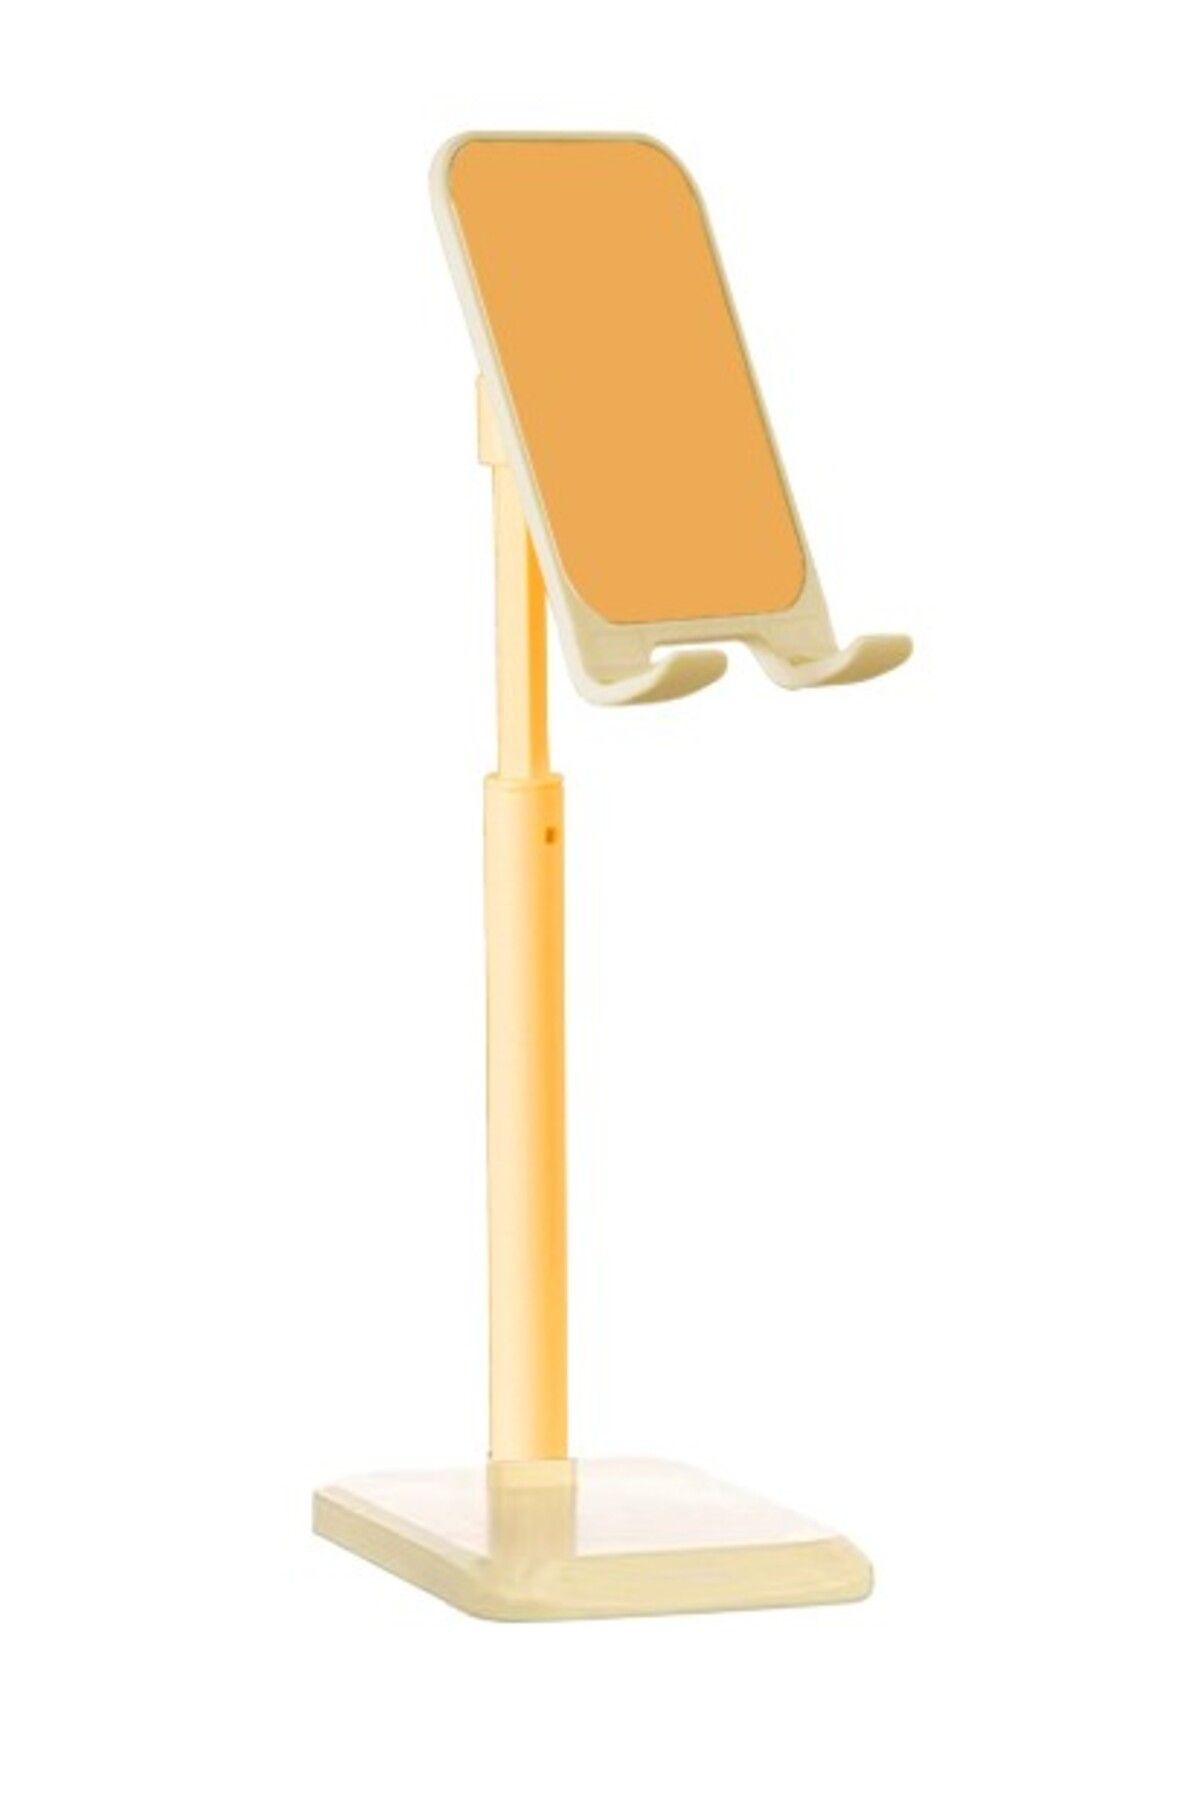 Miniso Ayarlanabilir Masa Üstü Telefon Tutucu (Sarı)